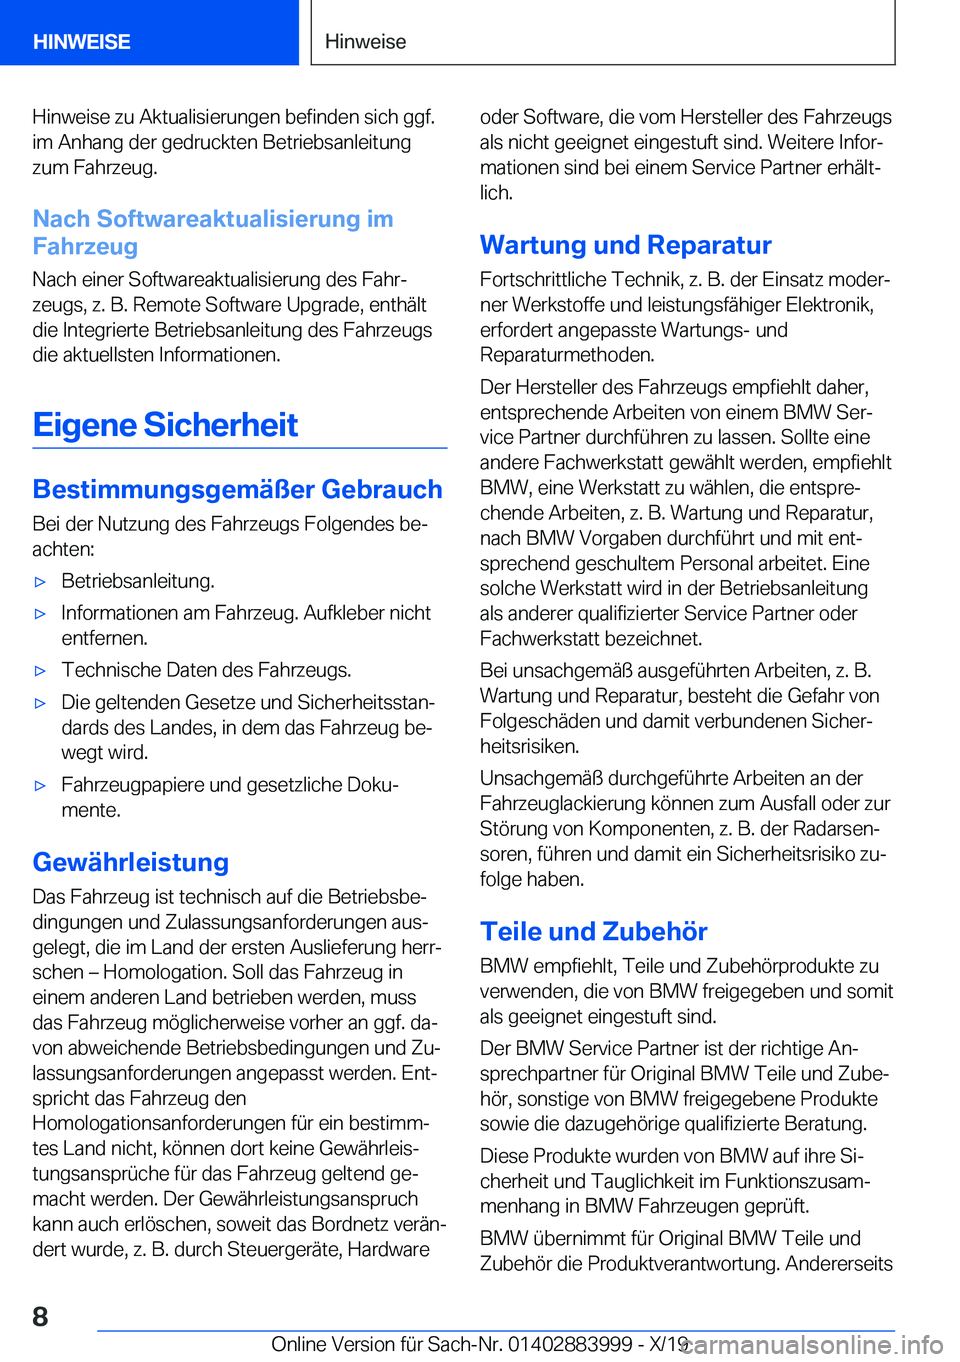 BMW X7 2020  Betriebsanleitungen (in German) �H�i�n�w�e�i�s�e��z�u��A�k�t�u�a�l�i�s�i�e�r�u�n�g�e�n��b�e�f�i�n�d�e�n��s�i�c�h��g�g�f�.�i�m��A�n�h�a�n�g��d�e�r��g�e�d�r�u�c�k�t�e�n��B�e�t�r�i�e�b�s�a�n�l�e�i�t�u�n�g�z�u�m��F�a�h�r�z�e�u